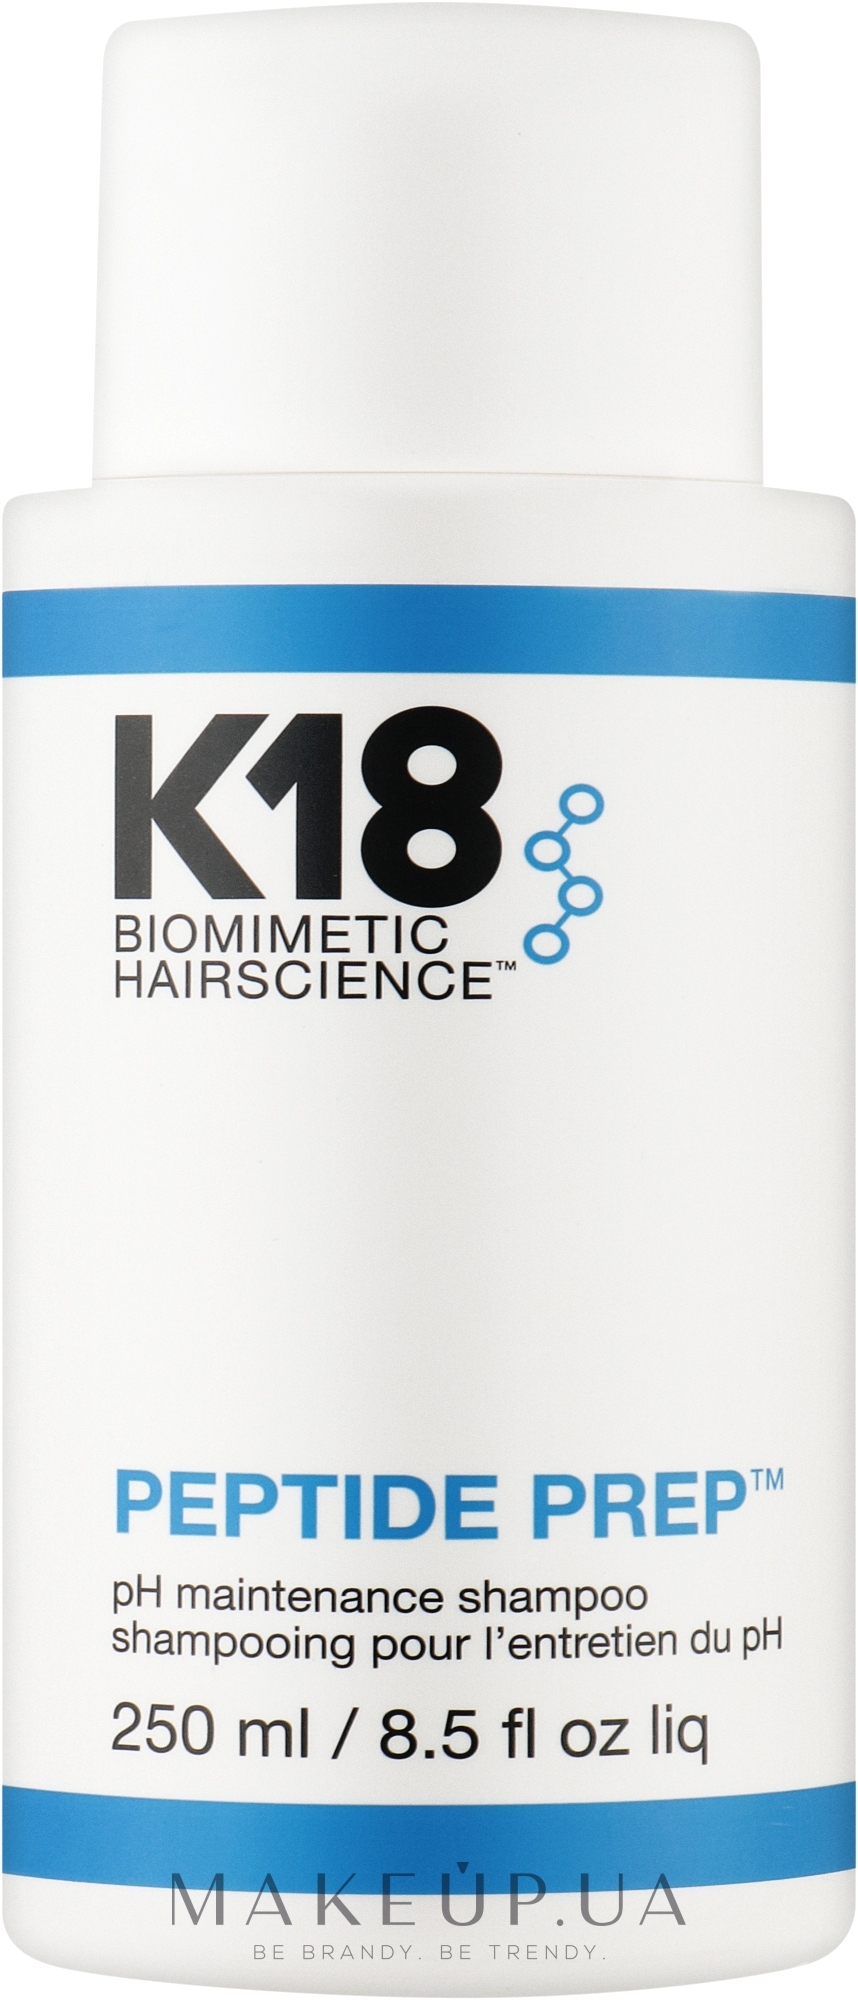 Шампунь с оптимизированным уровнем pH для частого использования - K18 Hair Biomimetic Hairscience Peptide Prep PH Shampoo — фото 250ml